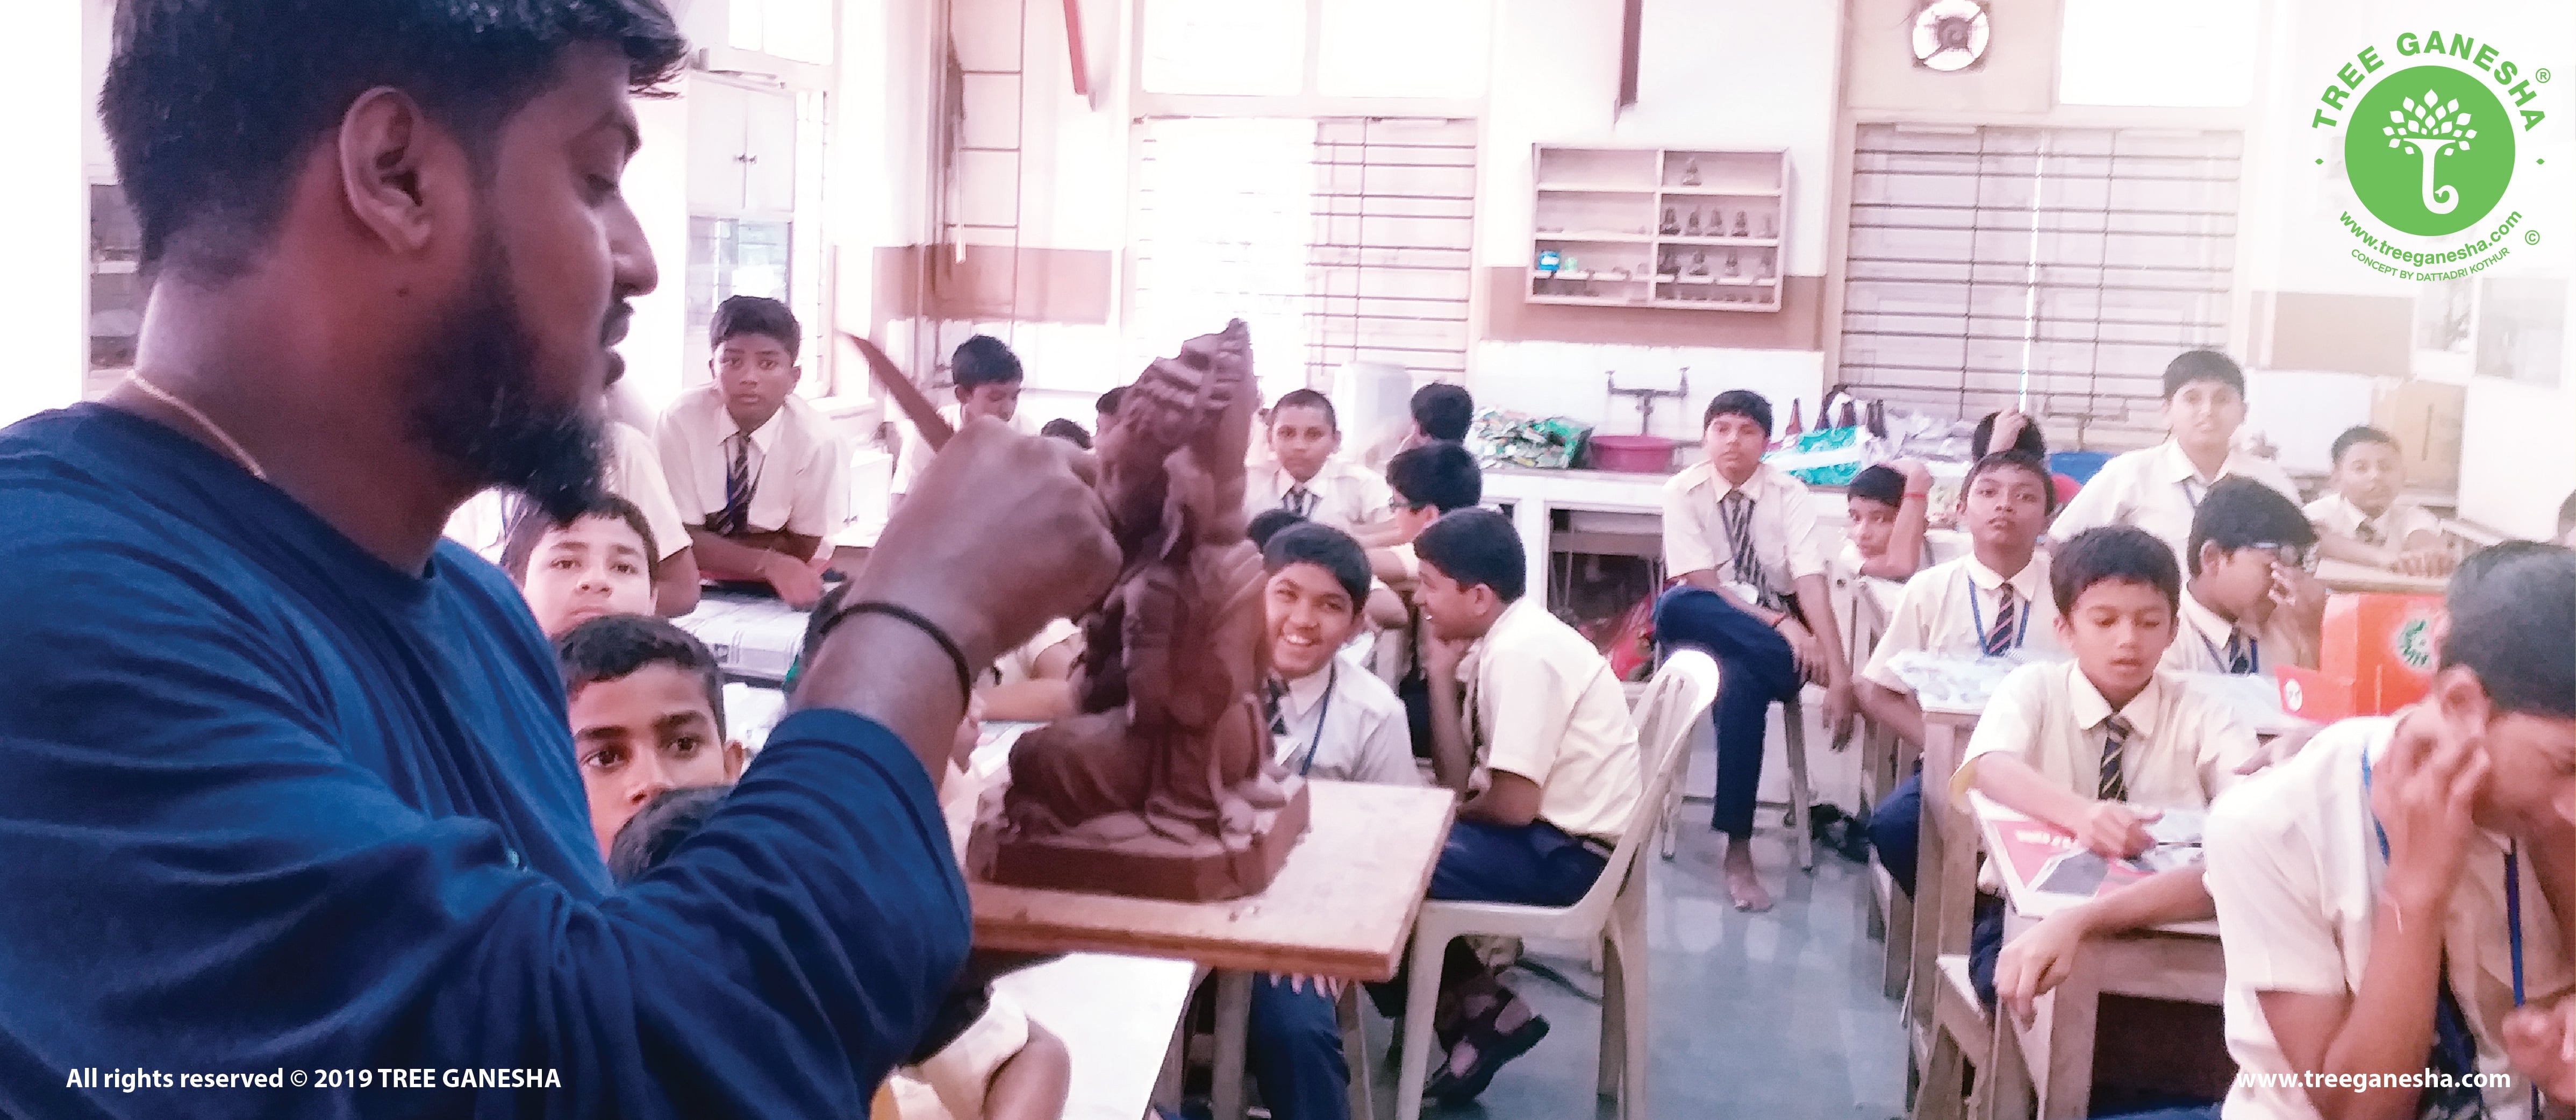 Tree Ganesha providing Workshop and Demo on how to make eco-friendly Idols